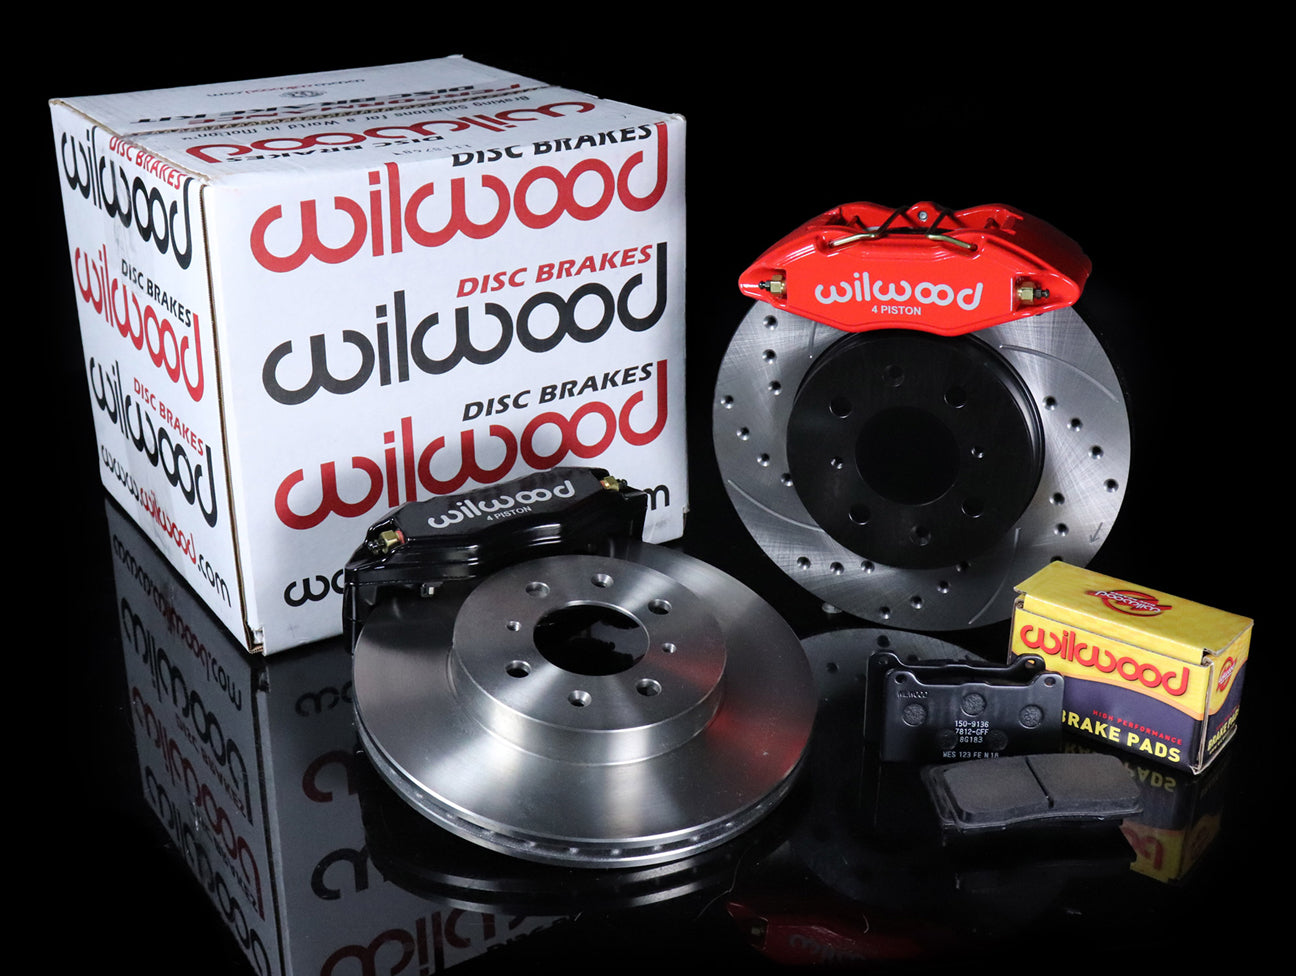 Wilwood DPHA Front Caliper & Rotor Brake Kit